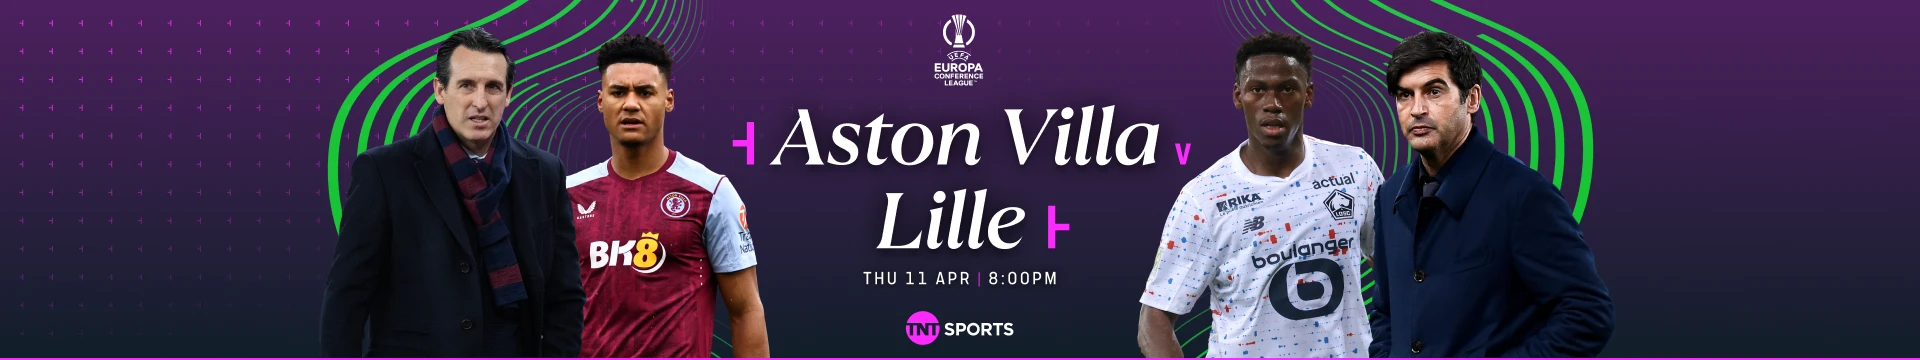 Aston Villa v Lille Thursday 11 April at 8pm